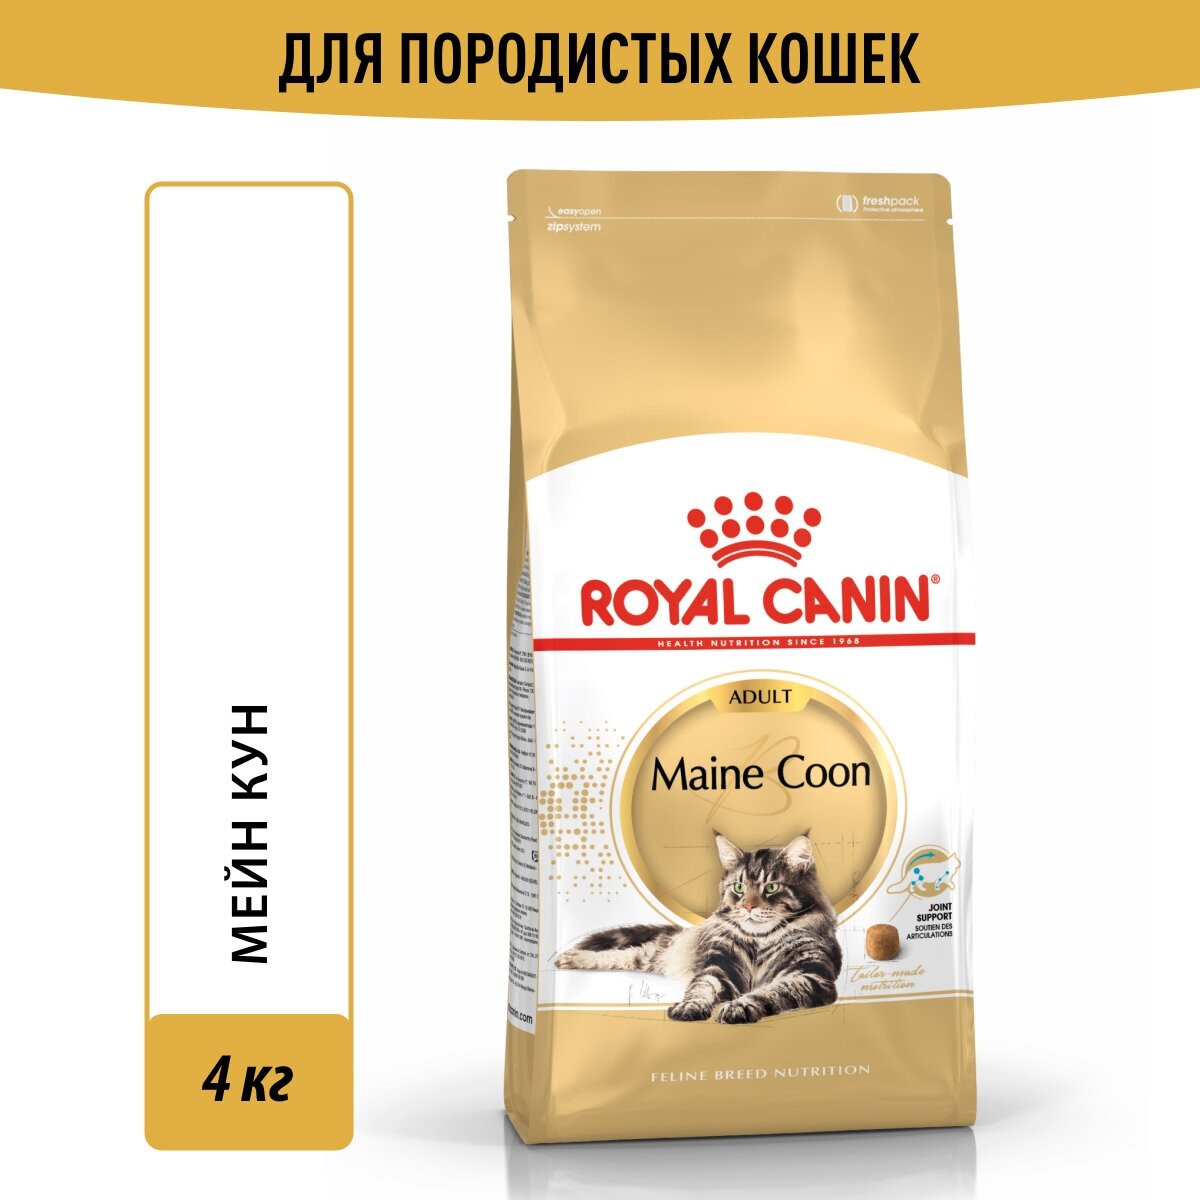 Royal Canin Сухой корм RC Maine Coon для крупных кошек, 4 кг